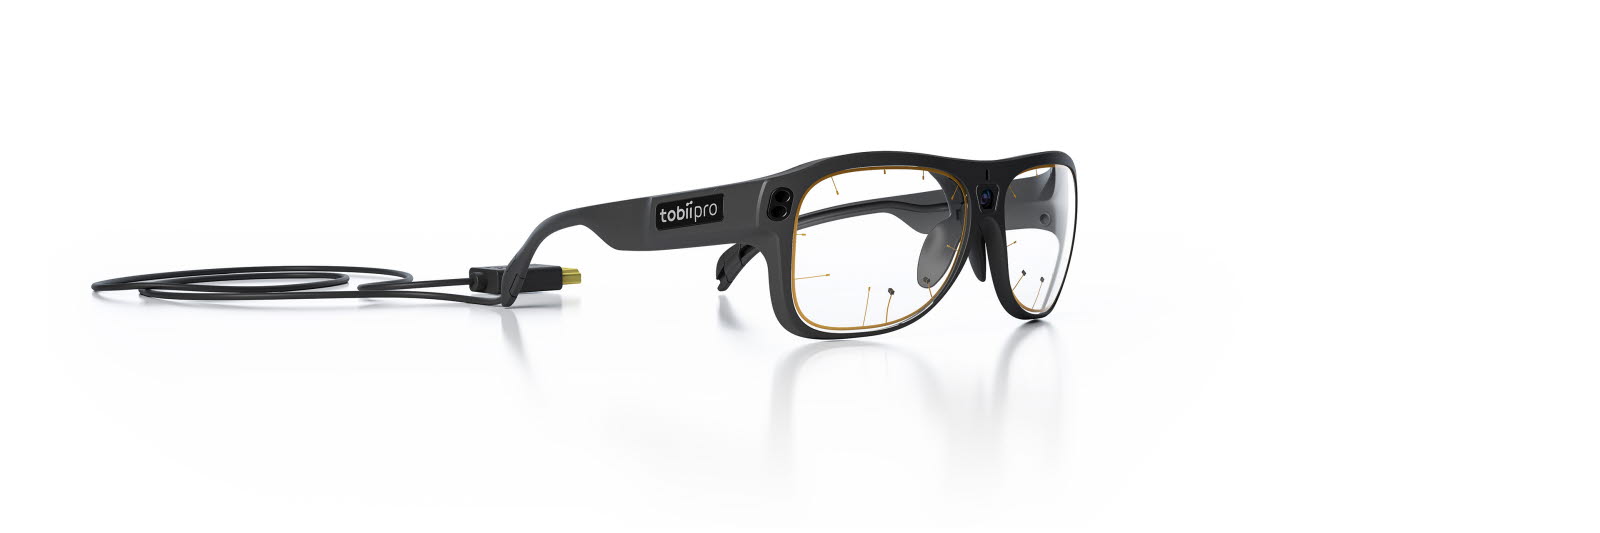 Tobii Pro Glasses 3 - wearable eye trackers